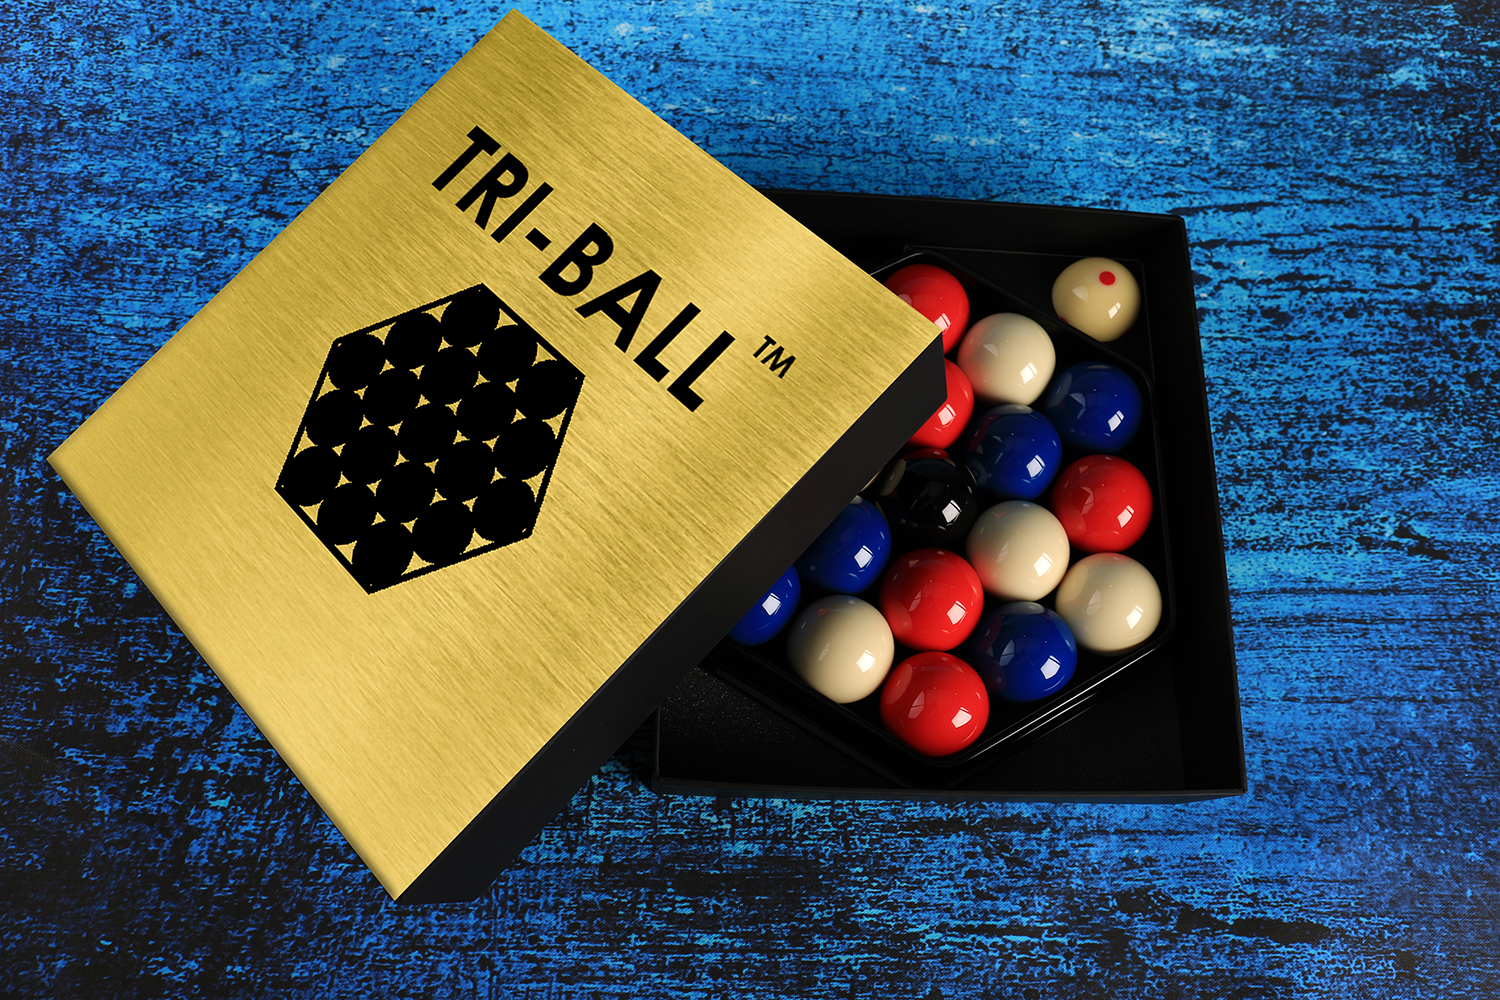 Rules of Play - Tri-ball™ Global – 3 player 8-ball